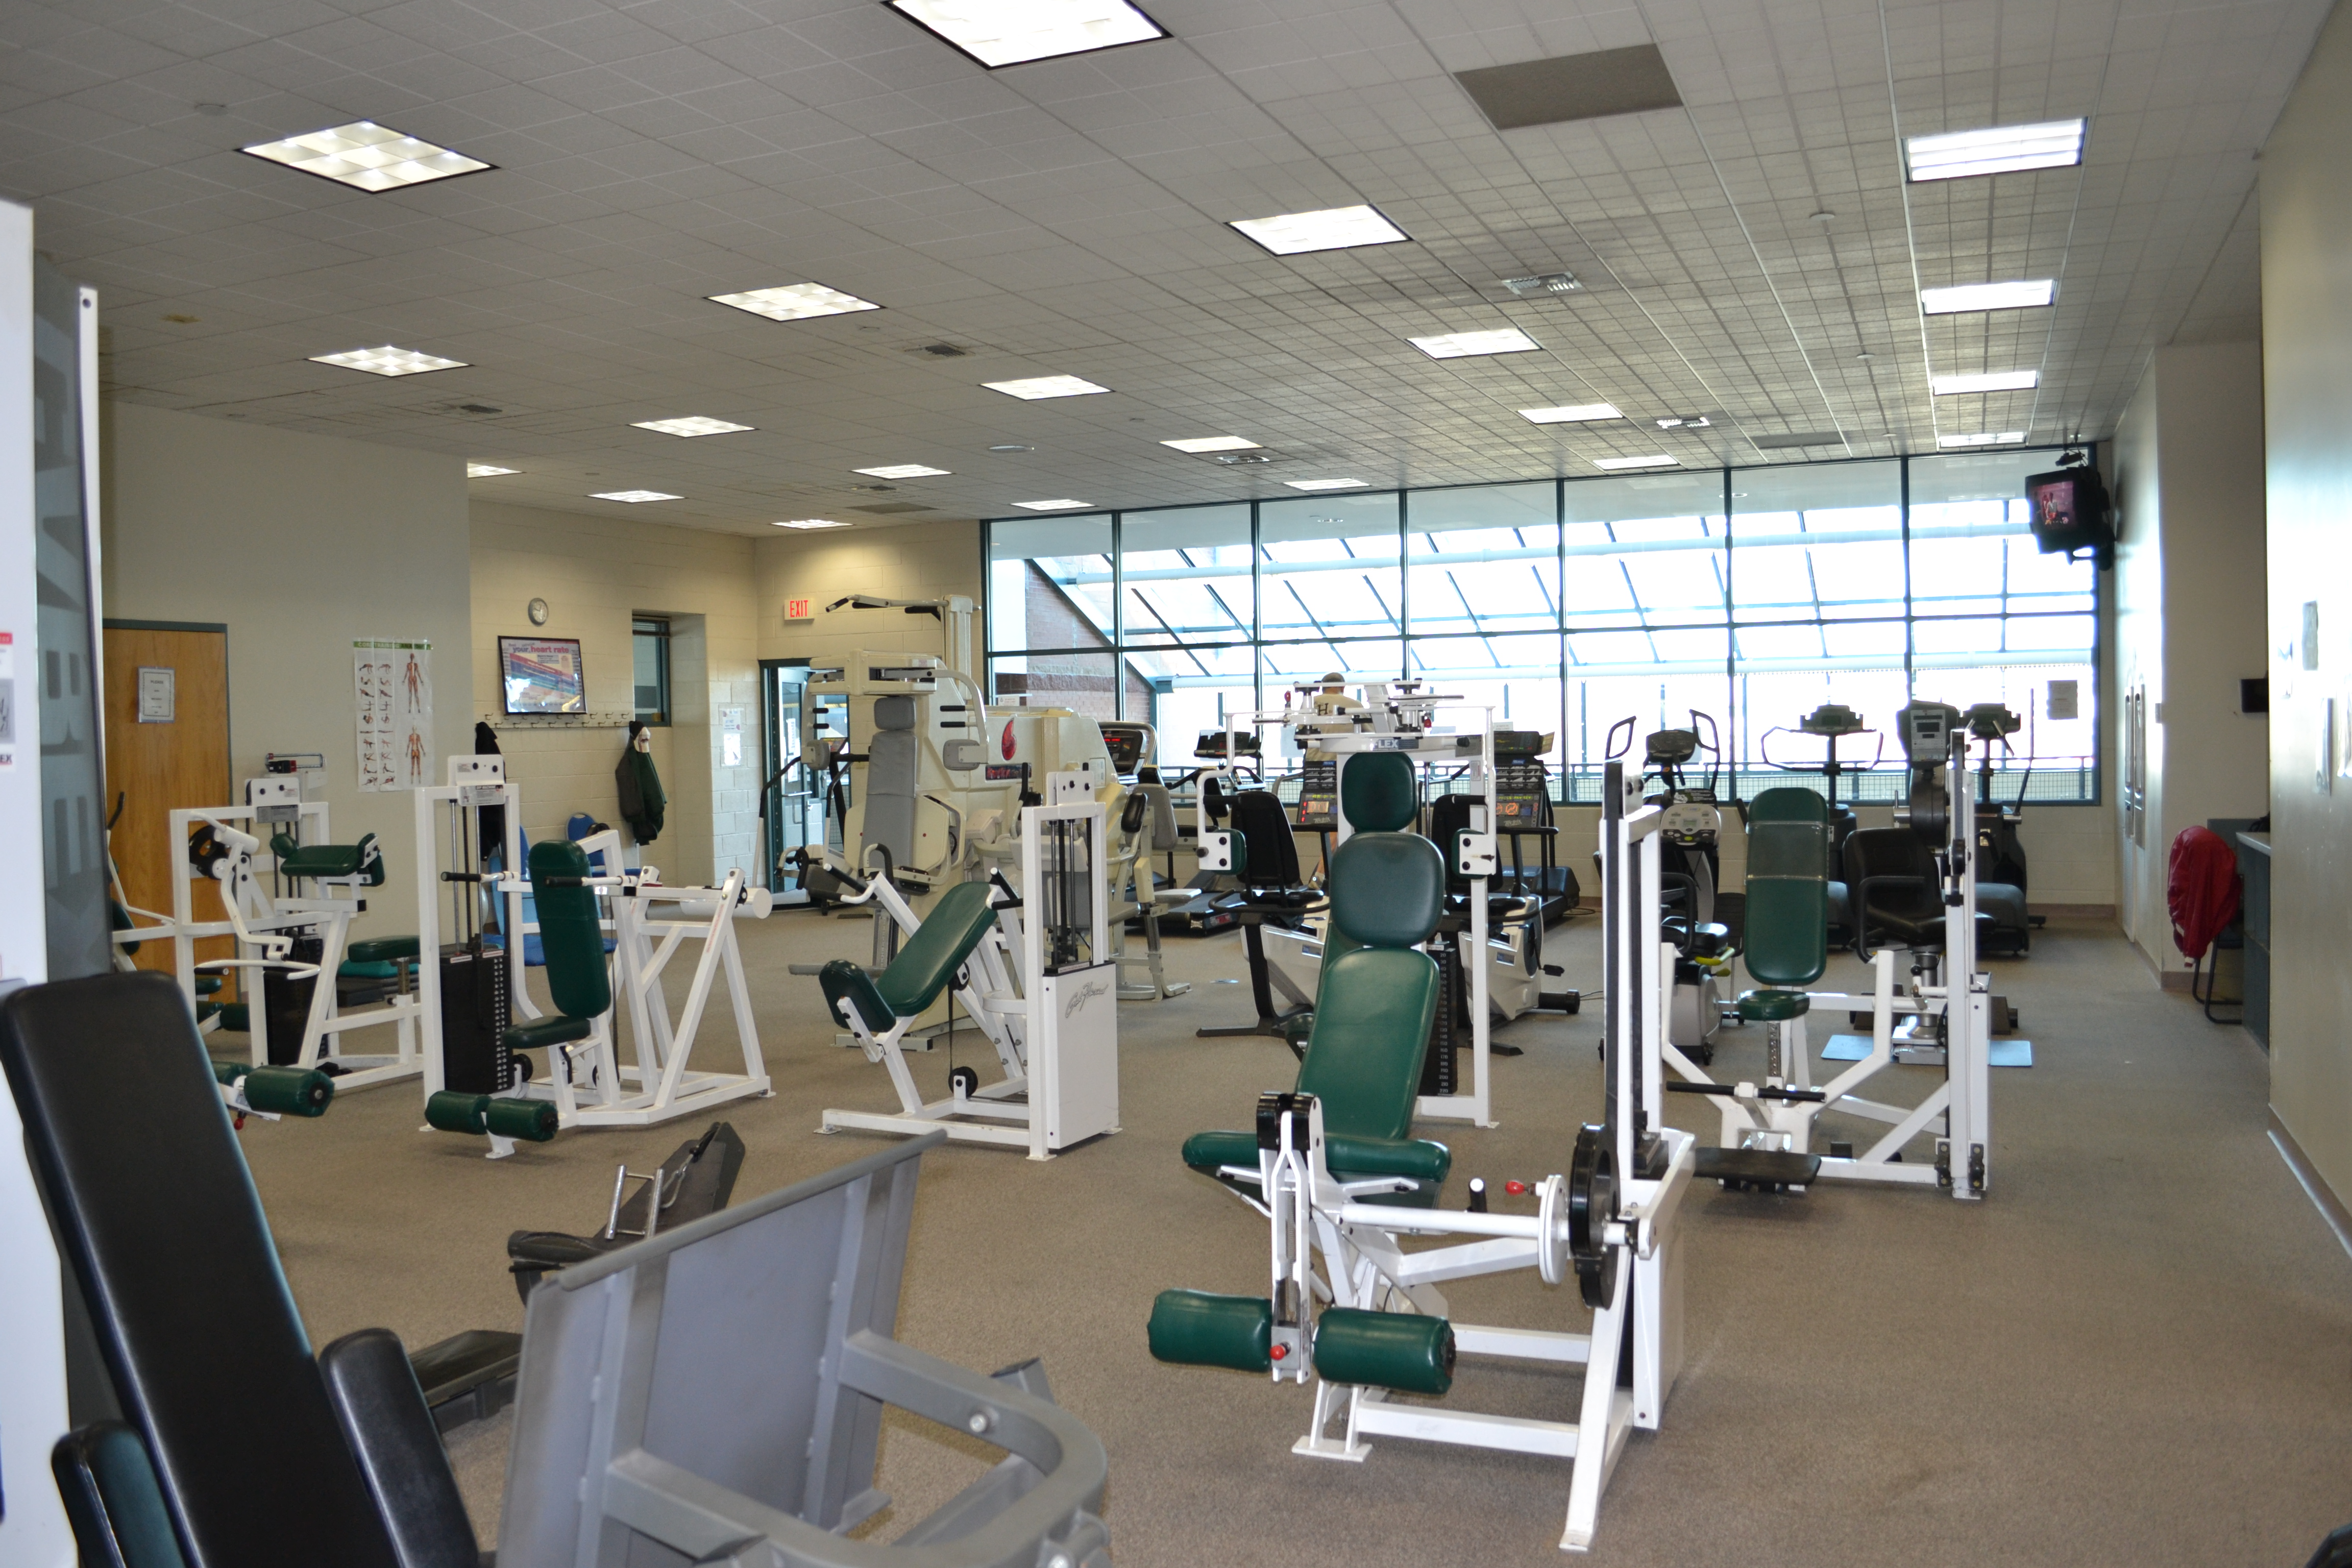 Gym facilities